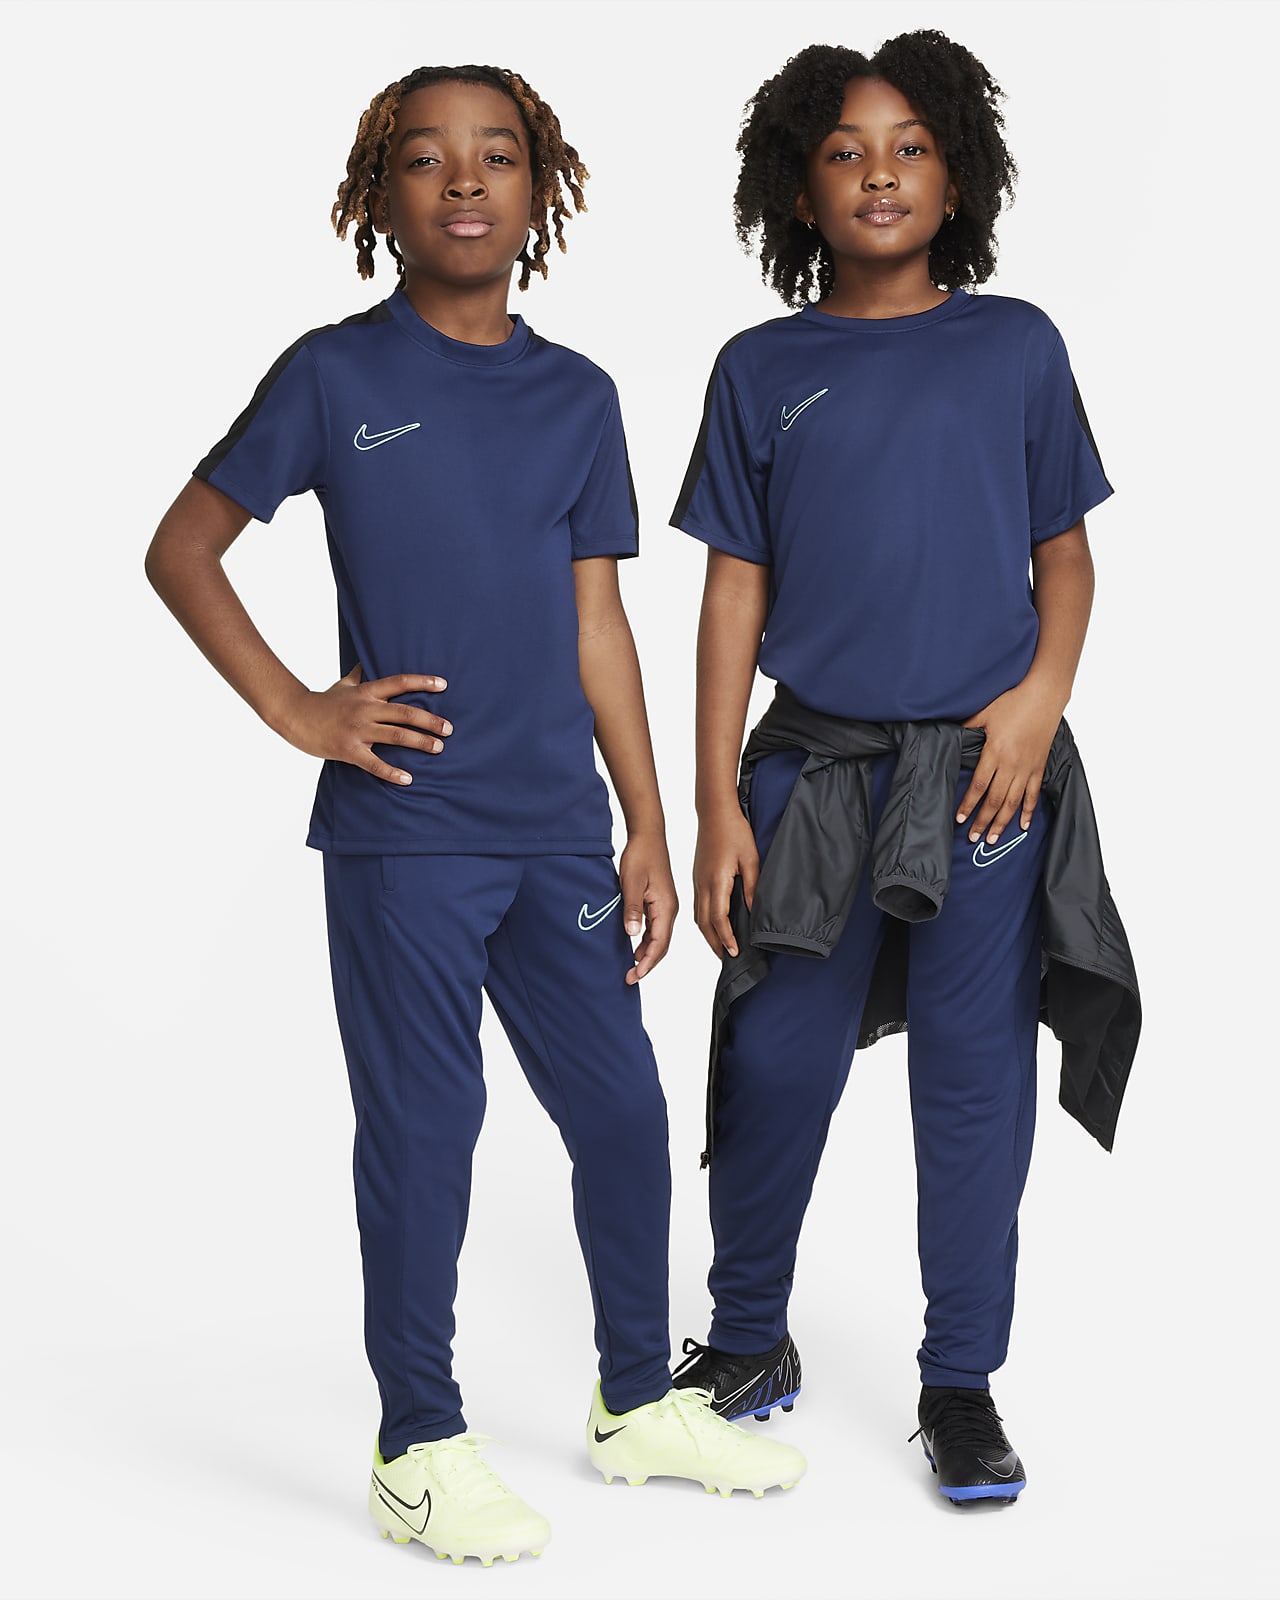 Shop Nike Dri-Fit Academy23 Soccer Pants by Nike online in Qatar